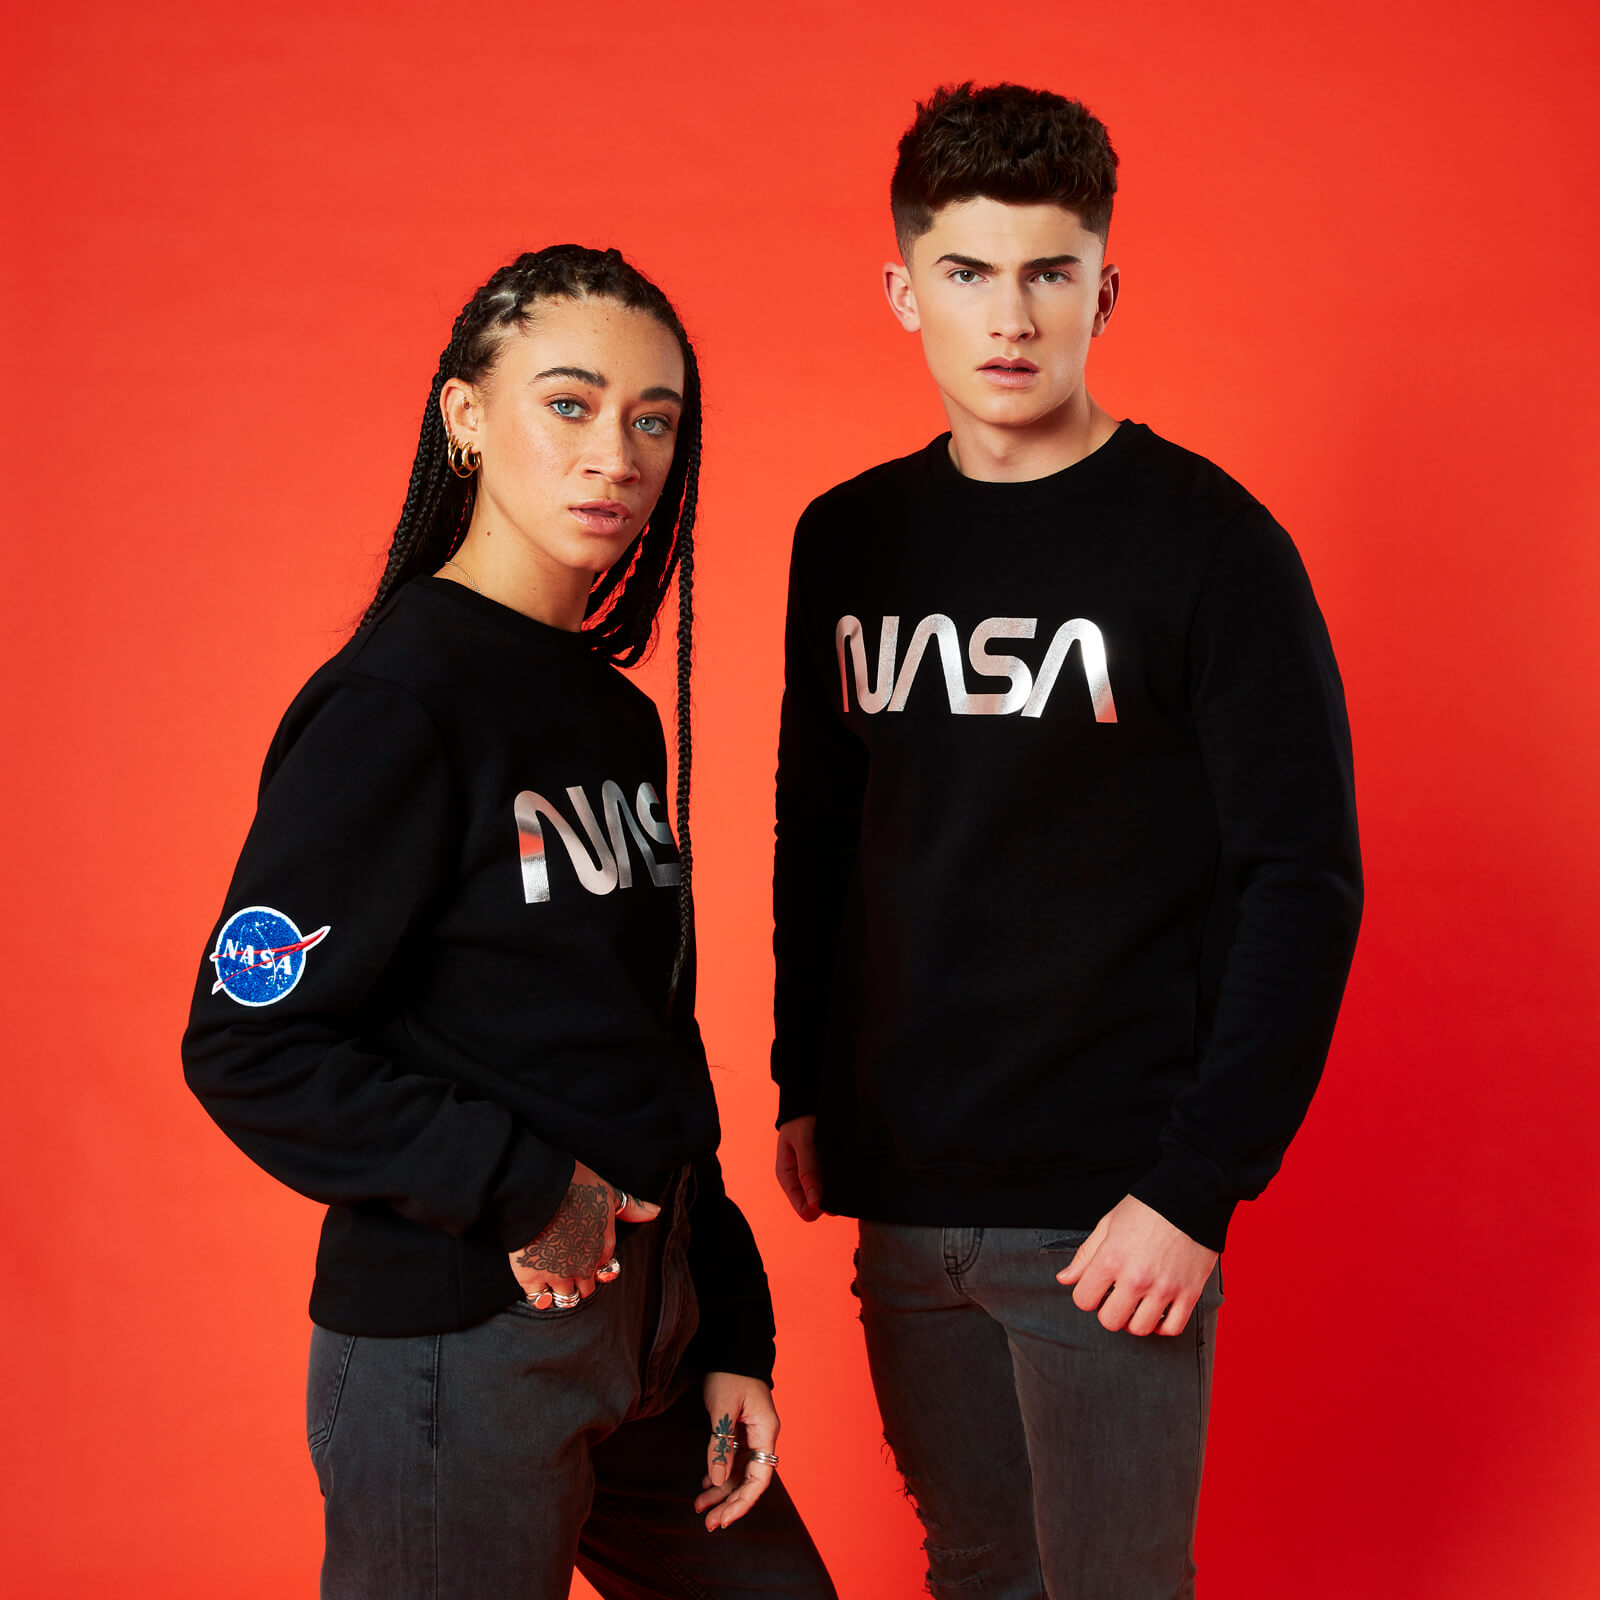 Nasa Metallic Logo Unisex Sweatshirt - Black - S